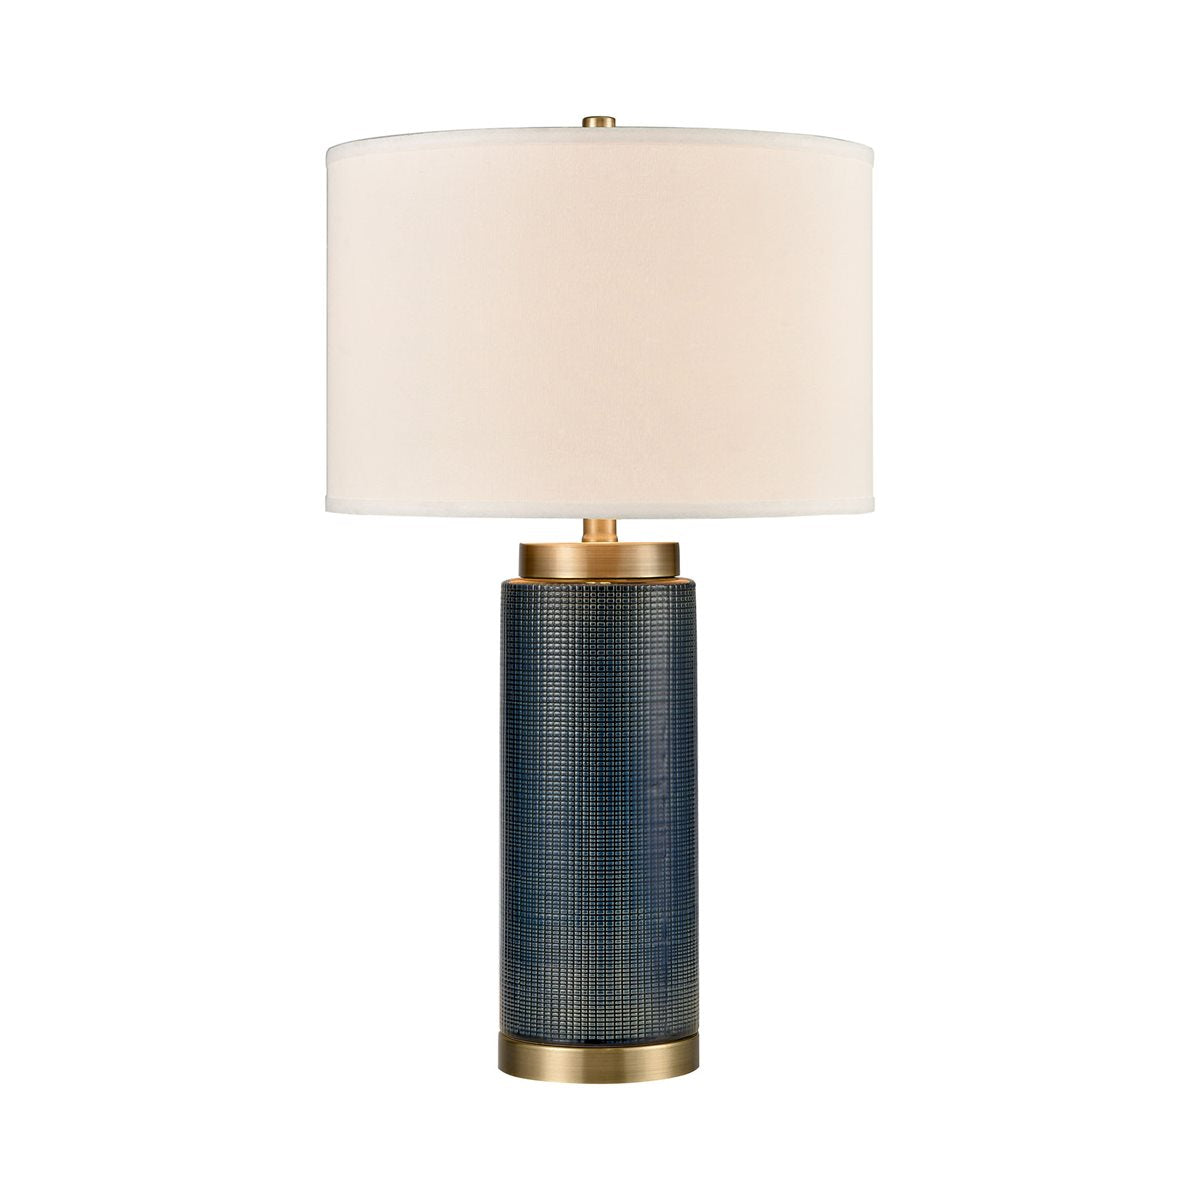 Stein World Concettas Ceramic Table Lamp 77185